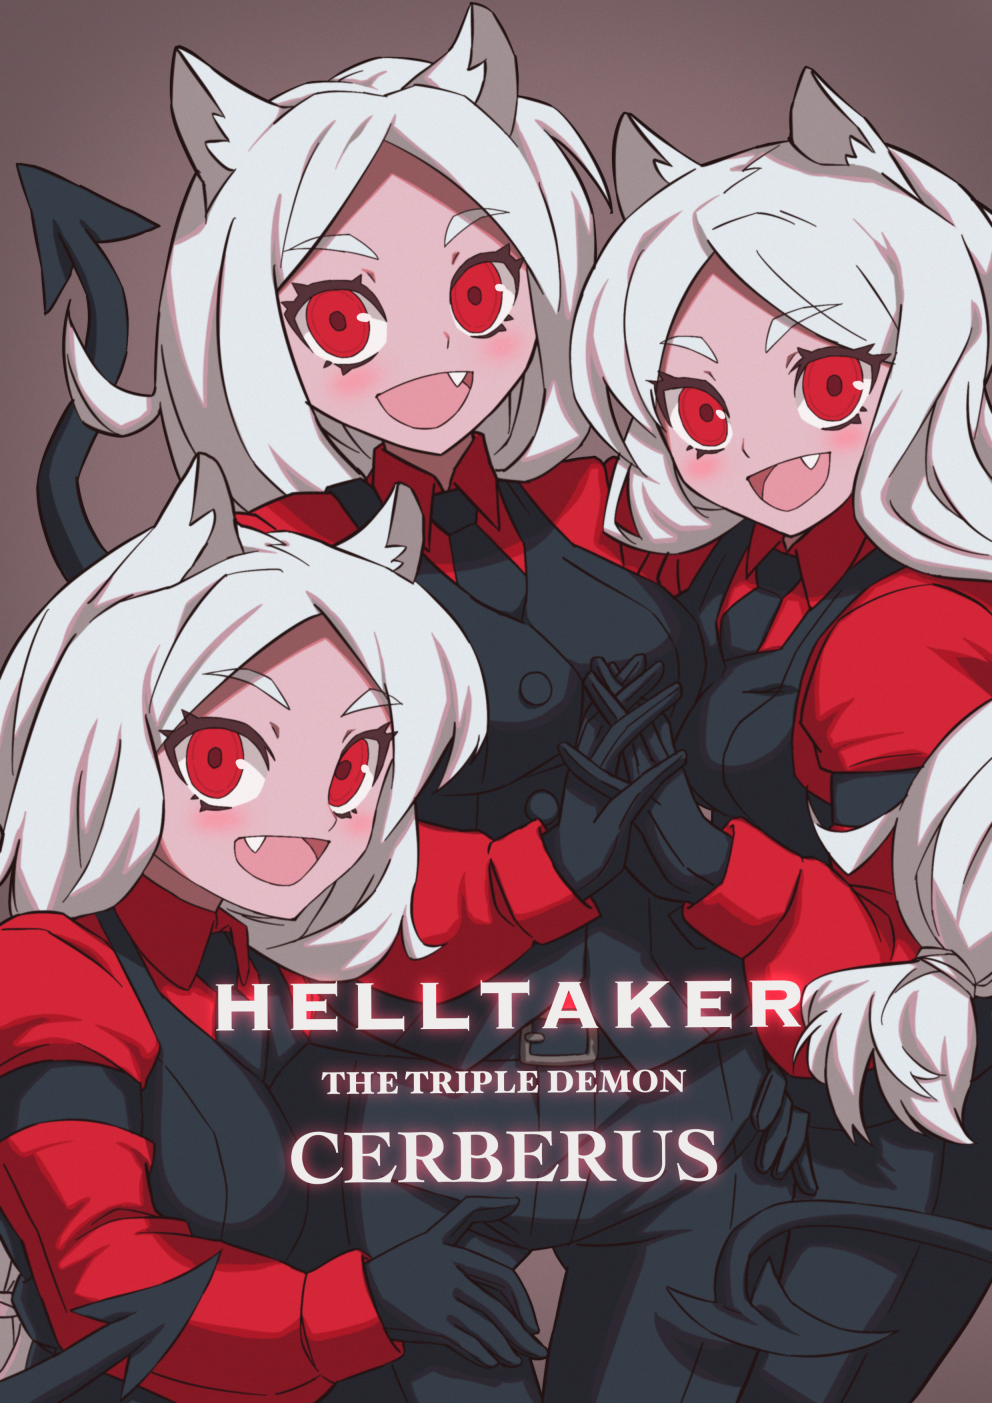 Cerberus (Helltaker) Image Anime Image Board